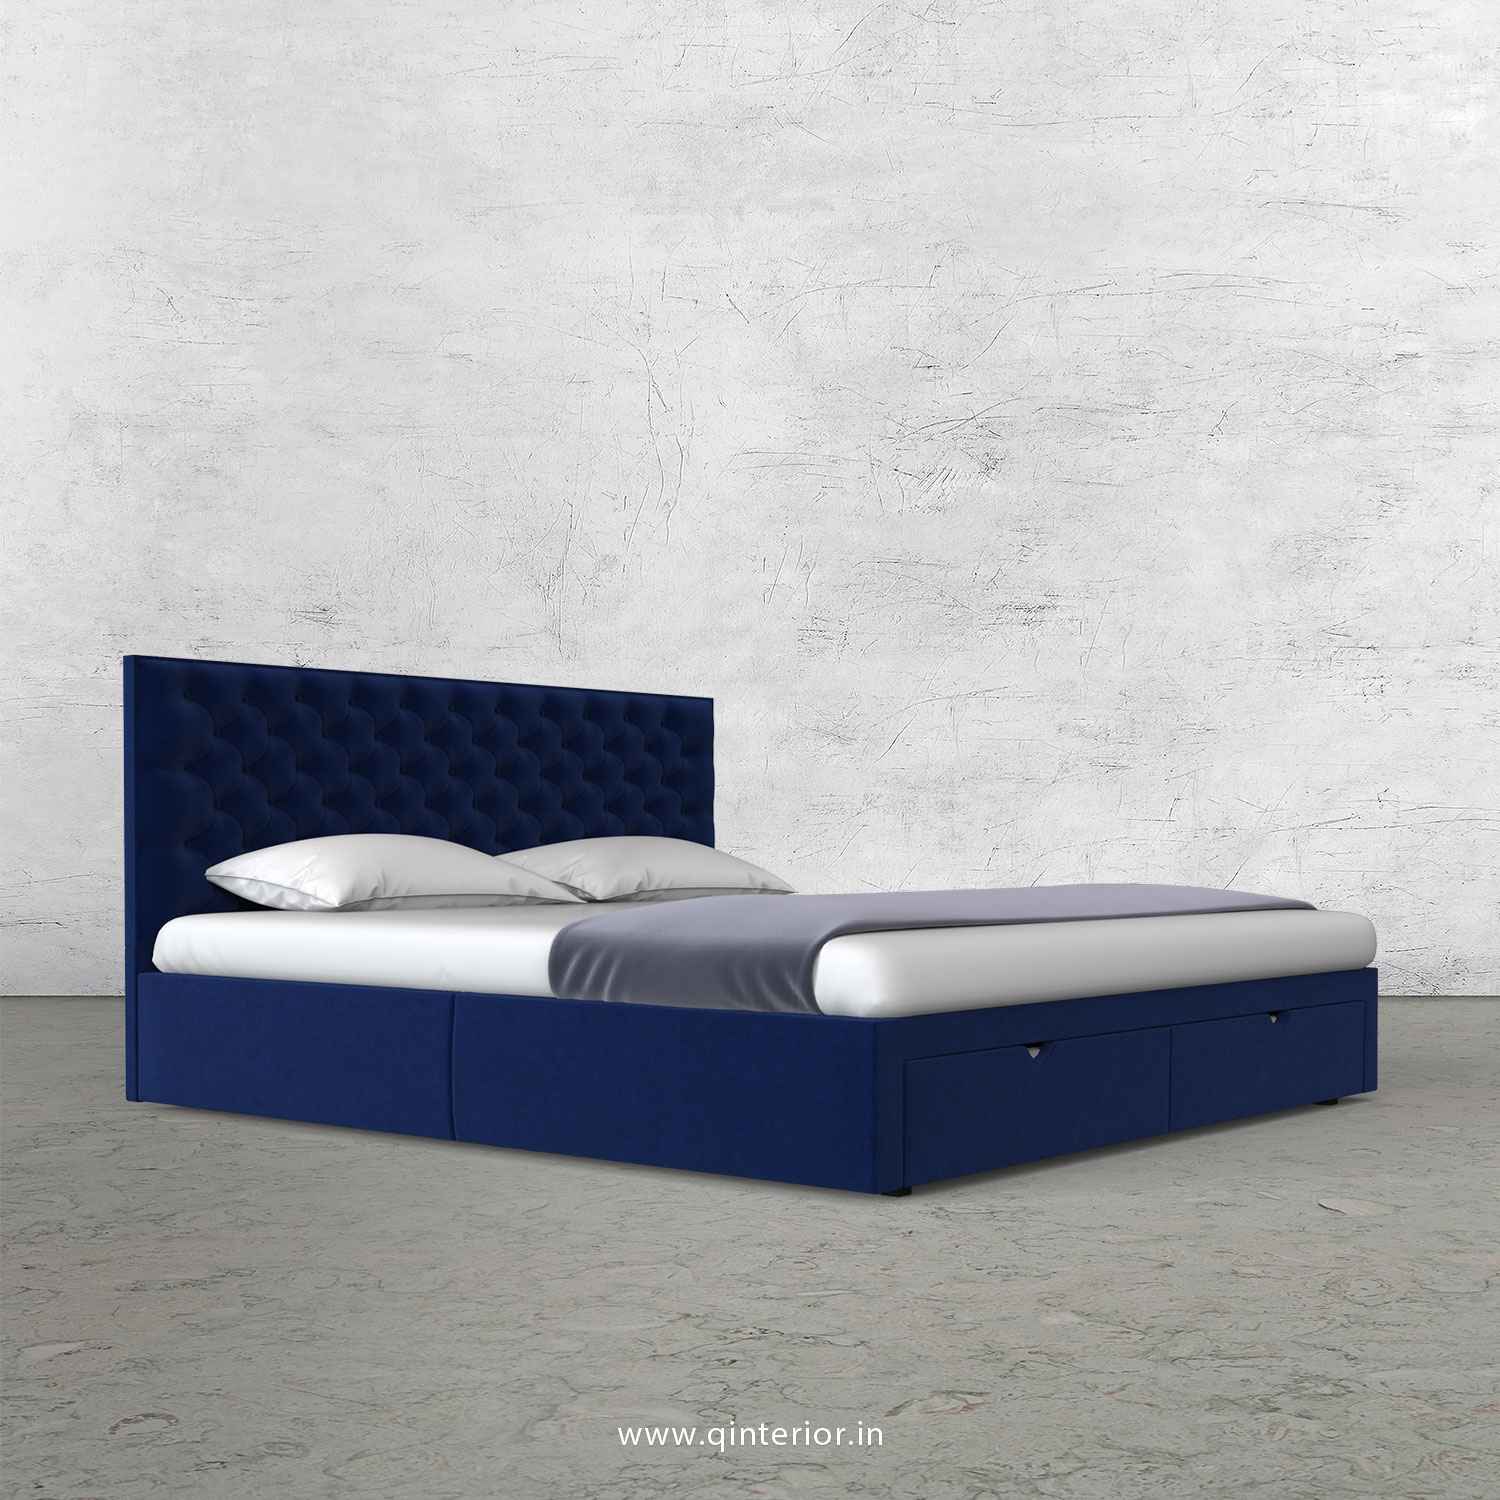 Orion King Size Storage Bed in Velvet Fabric - KBD001 VL05